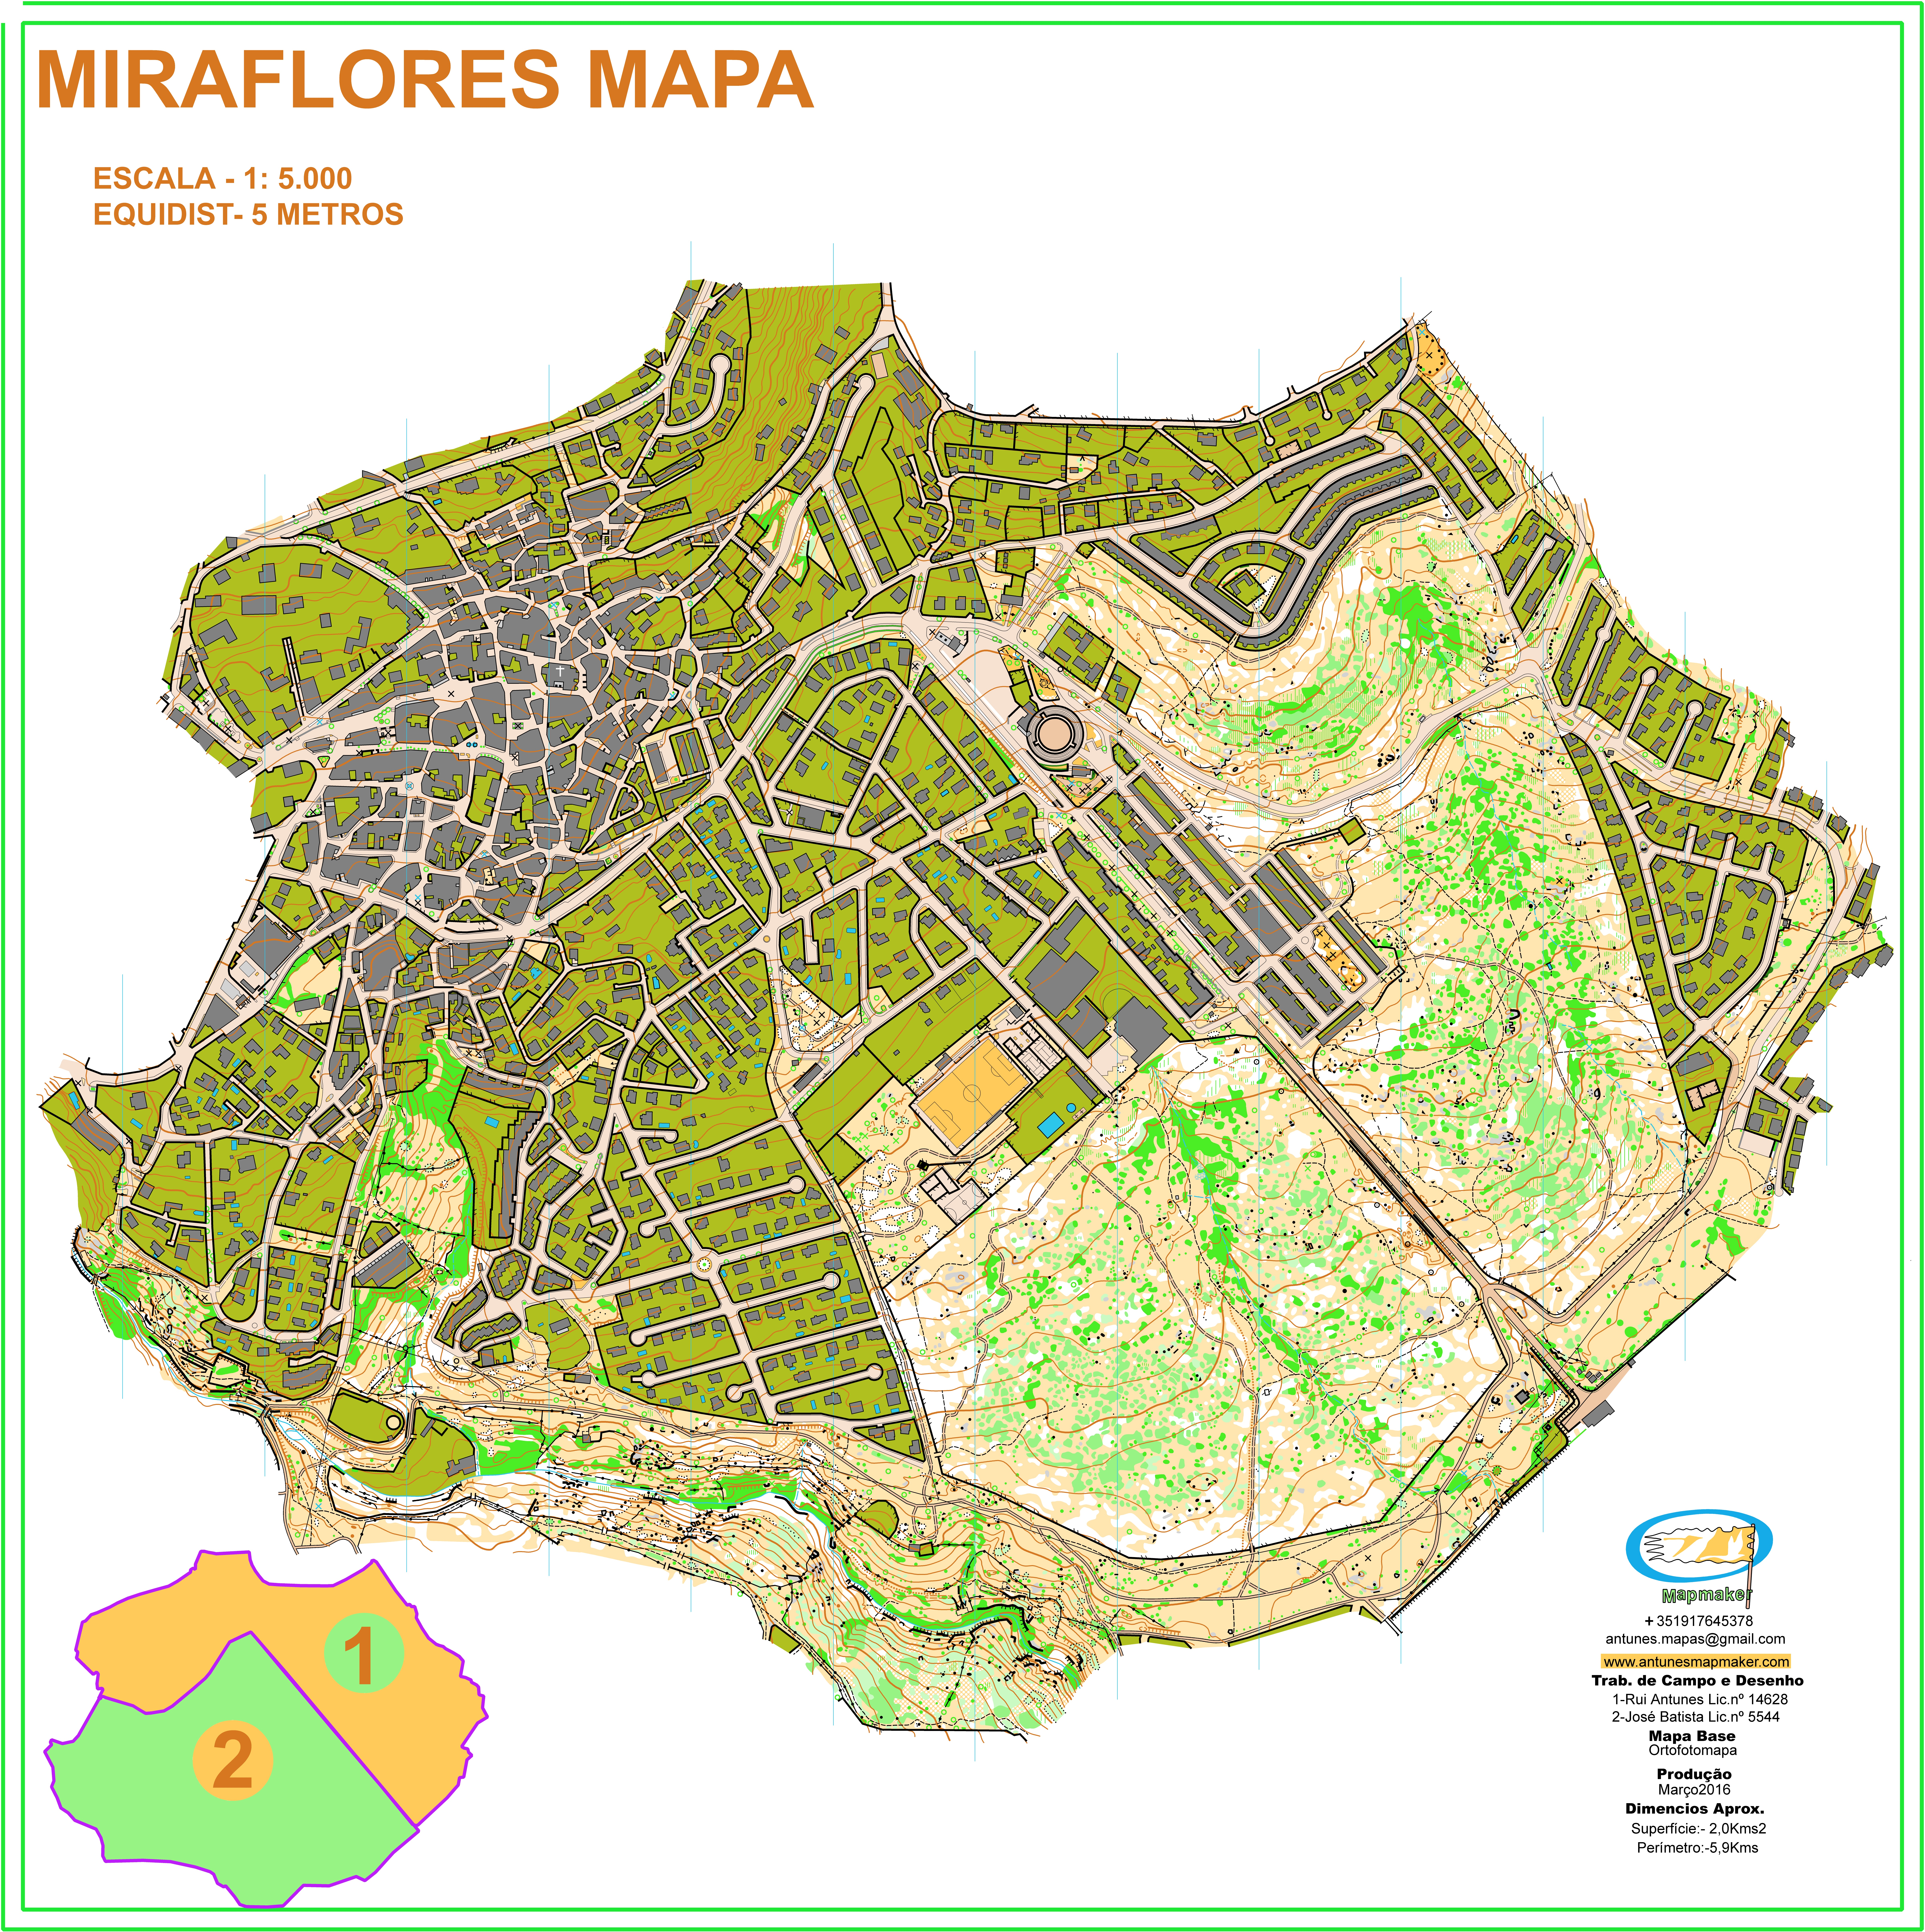 (192) - Map Miraflores de la Sierra-Spain MAR2016